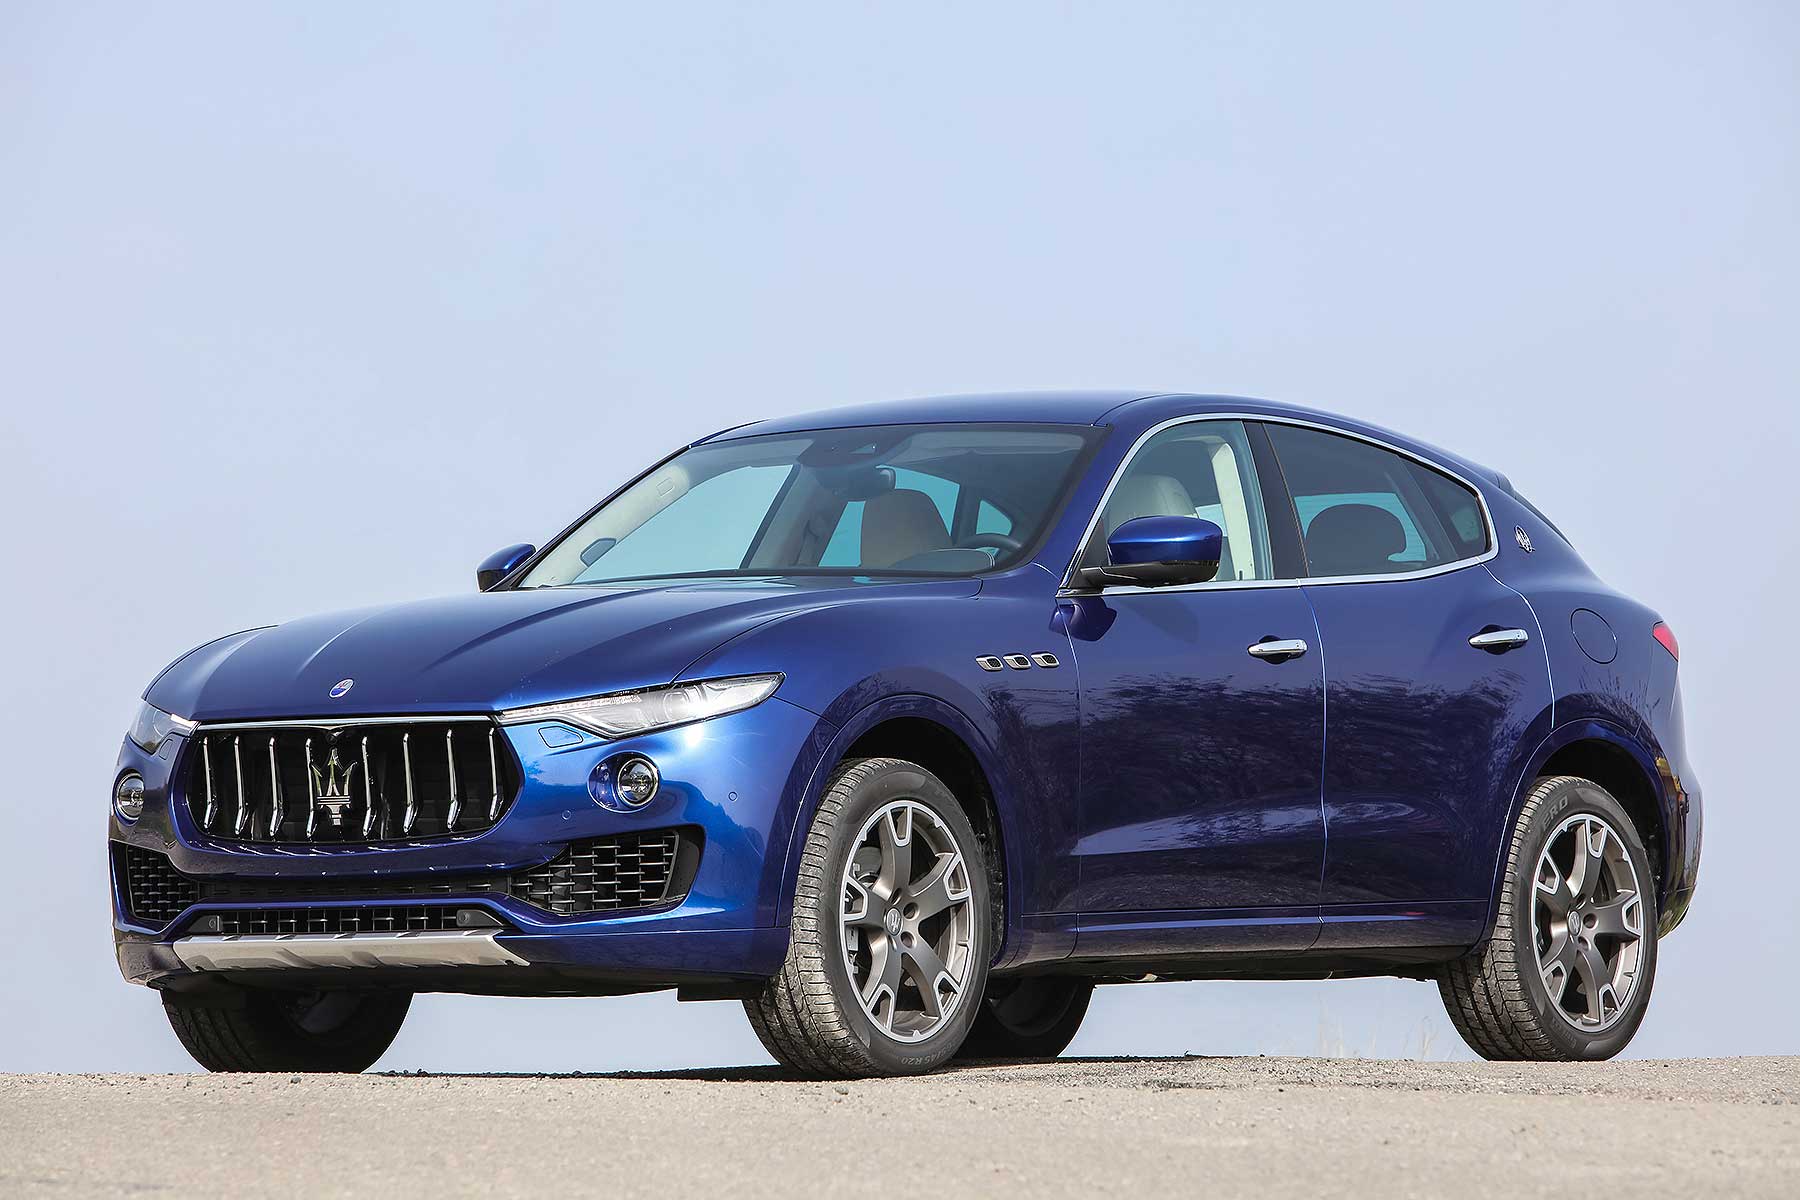 2016 Maserati Levante review: can Maserati really make an SUV